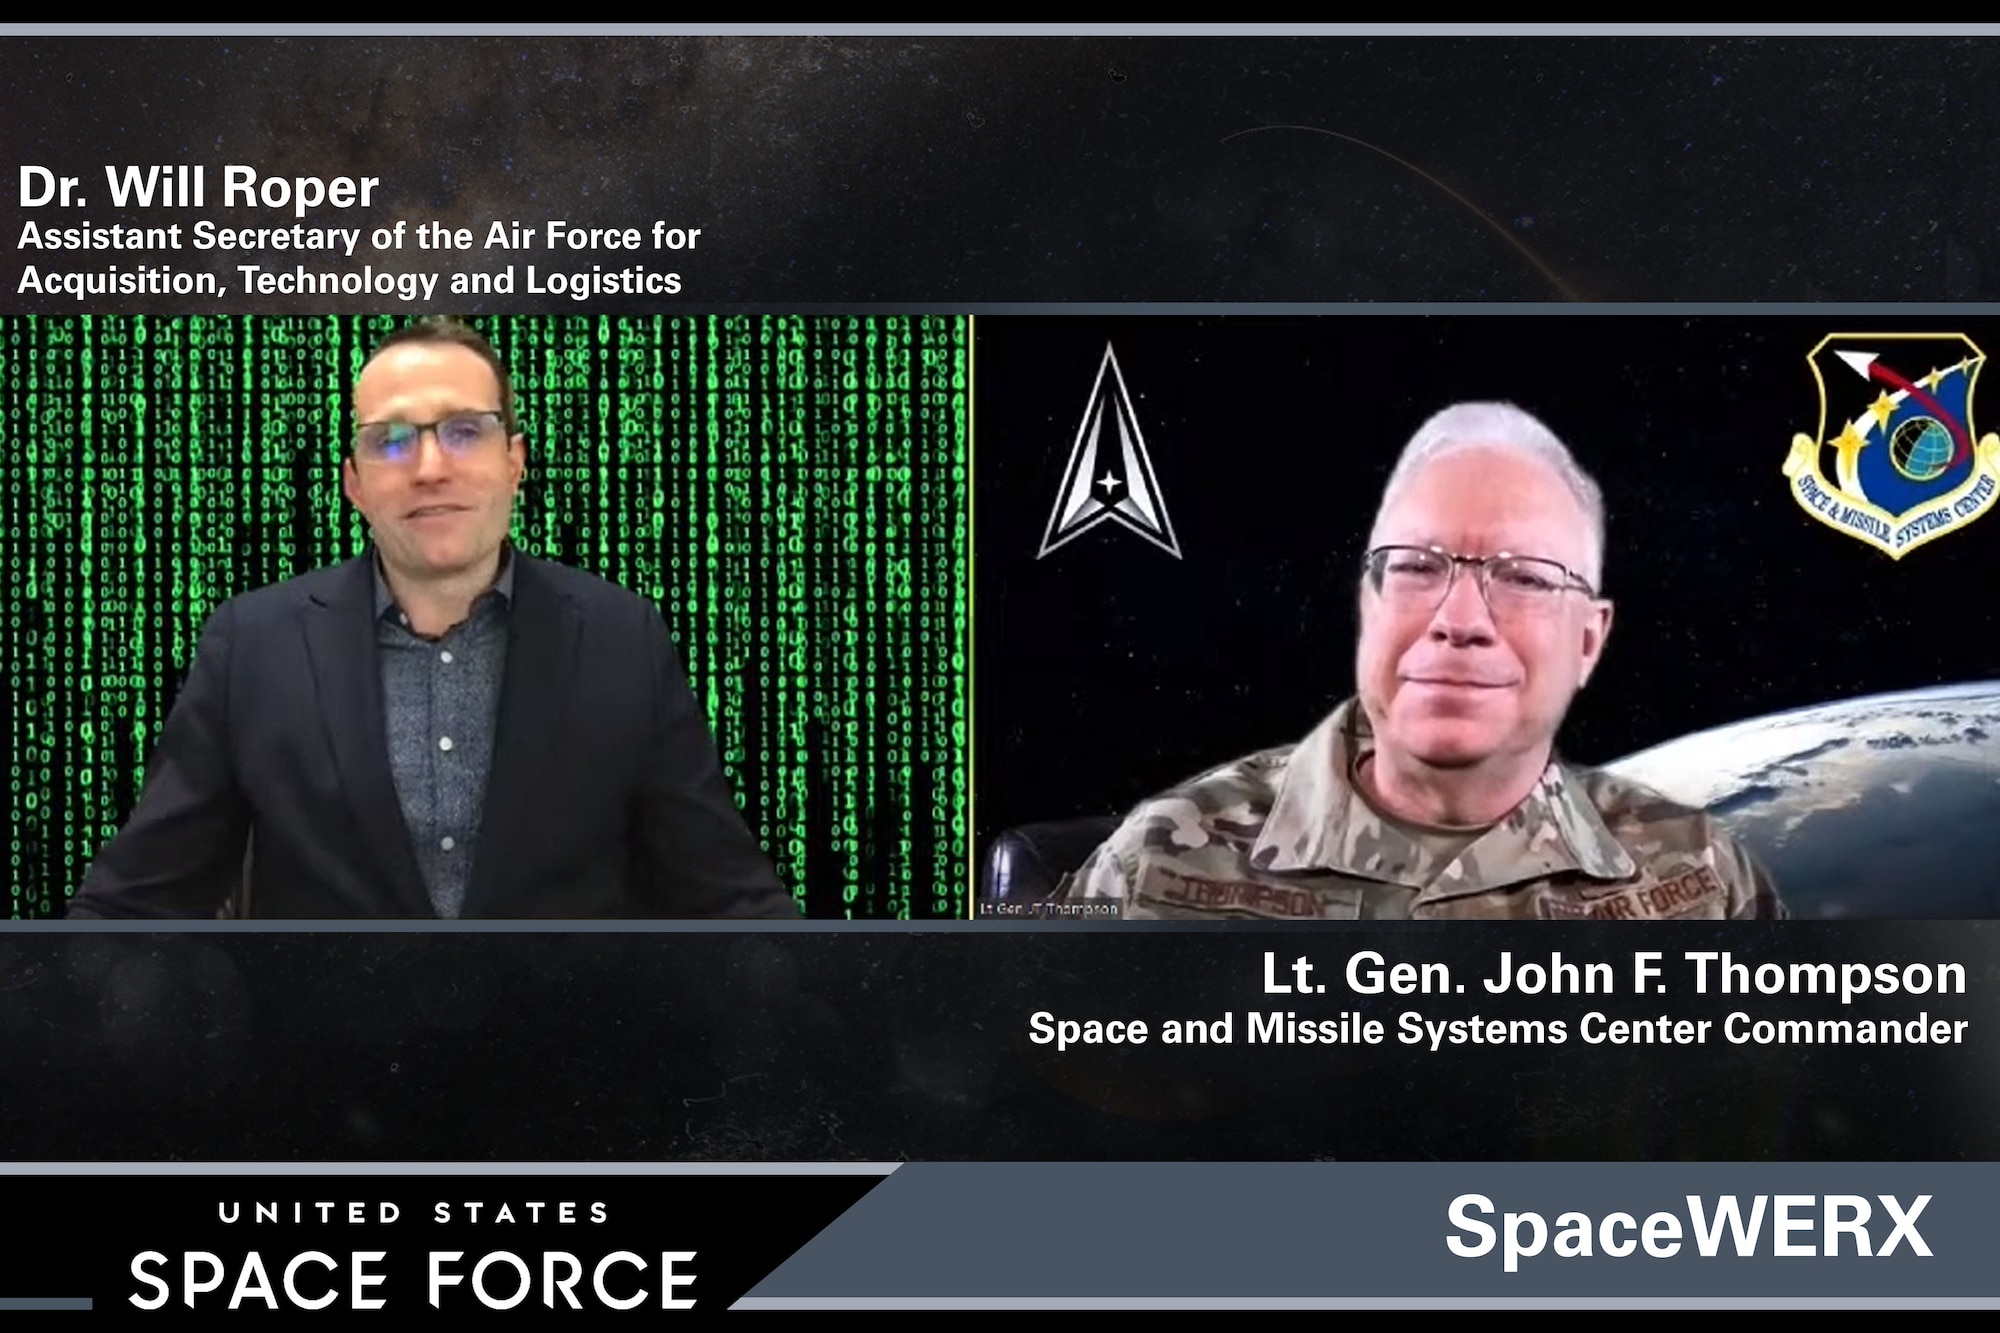 Dr. Will Roper and Lt. Gen. John F. Thompson discuss SpaceWERX